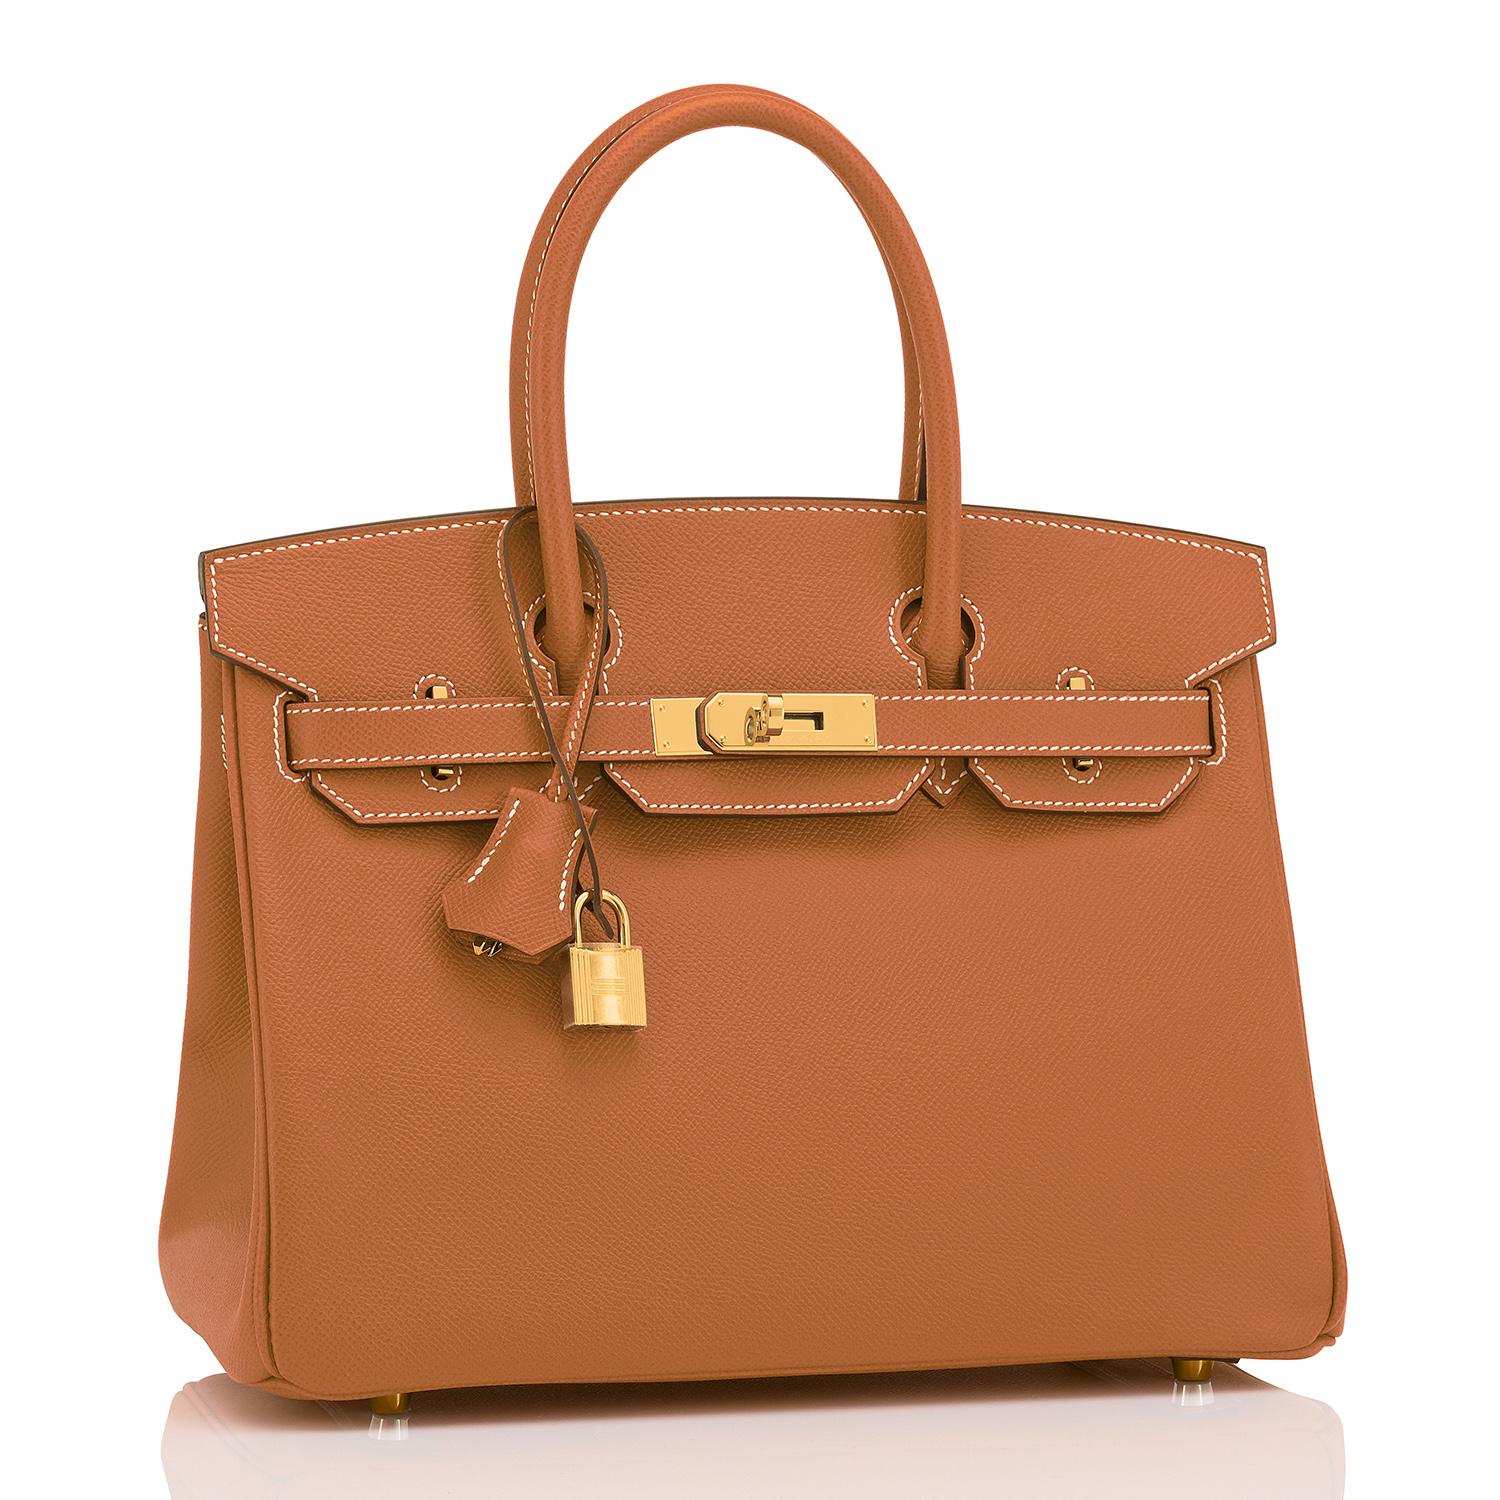 Women's or Men's Hermes Birkin 30cm Gold Camel Tan Gold Hardware Bag NEW